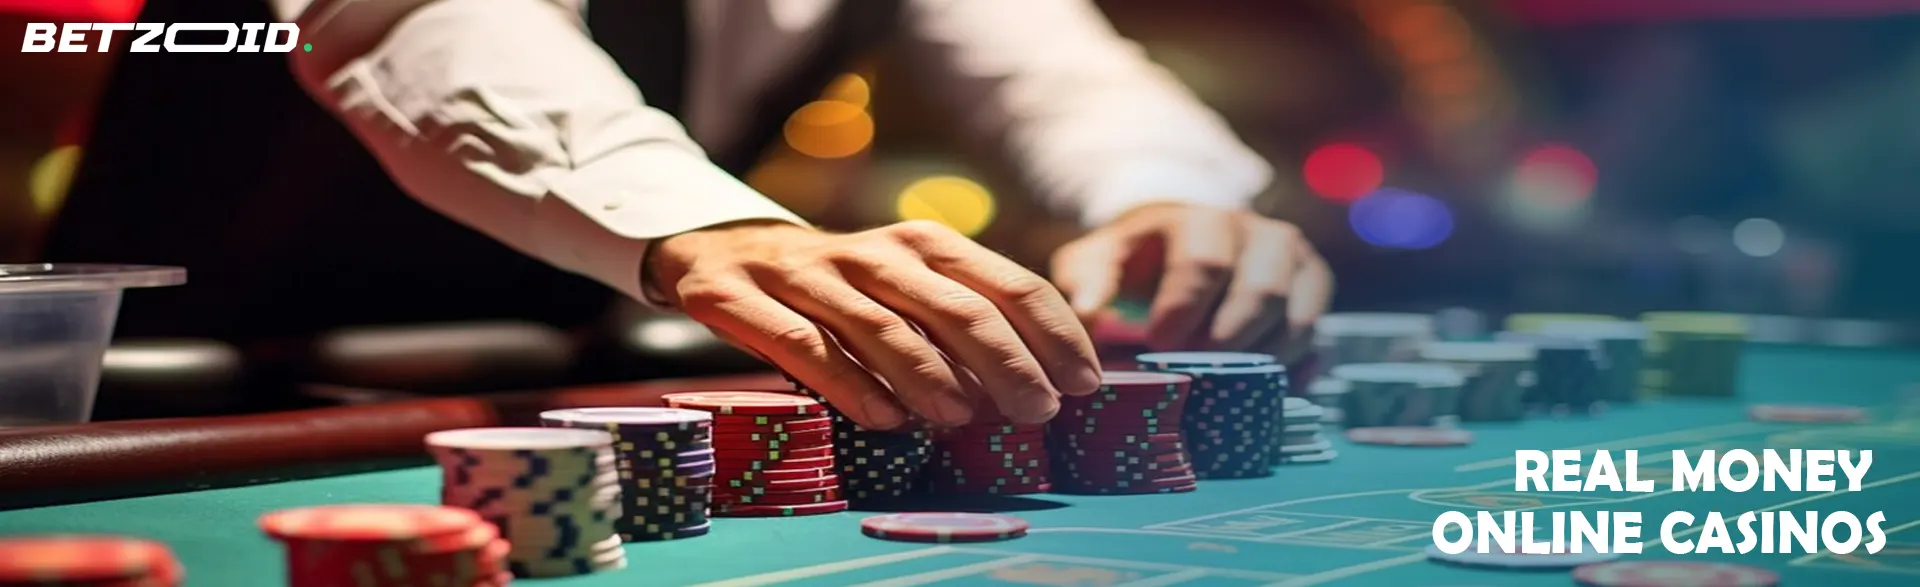 Real Money Online Casinos in Australia